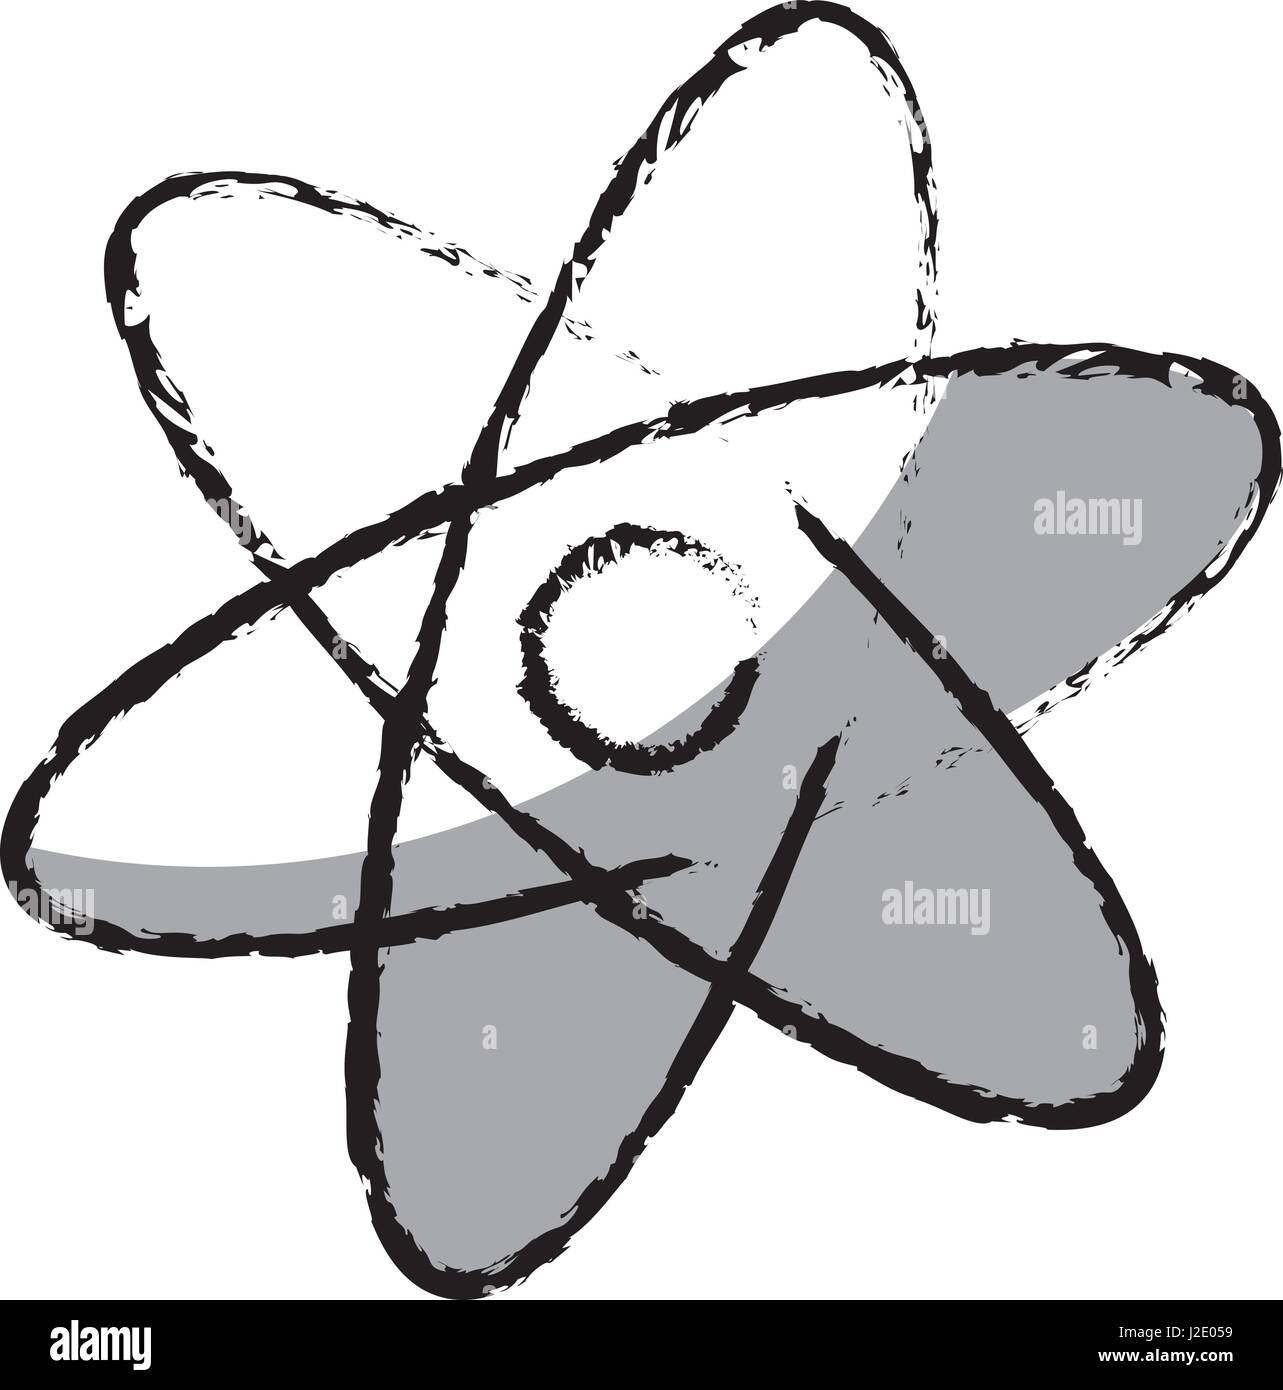 atom molecule isolated icon Stock Vector